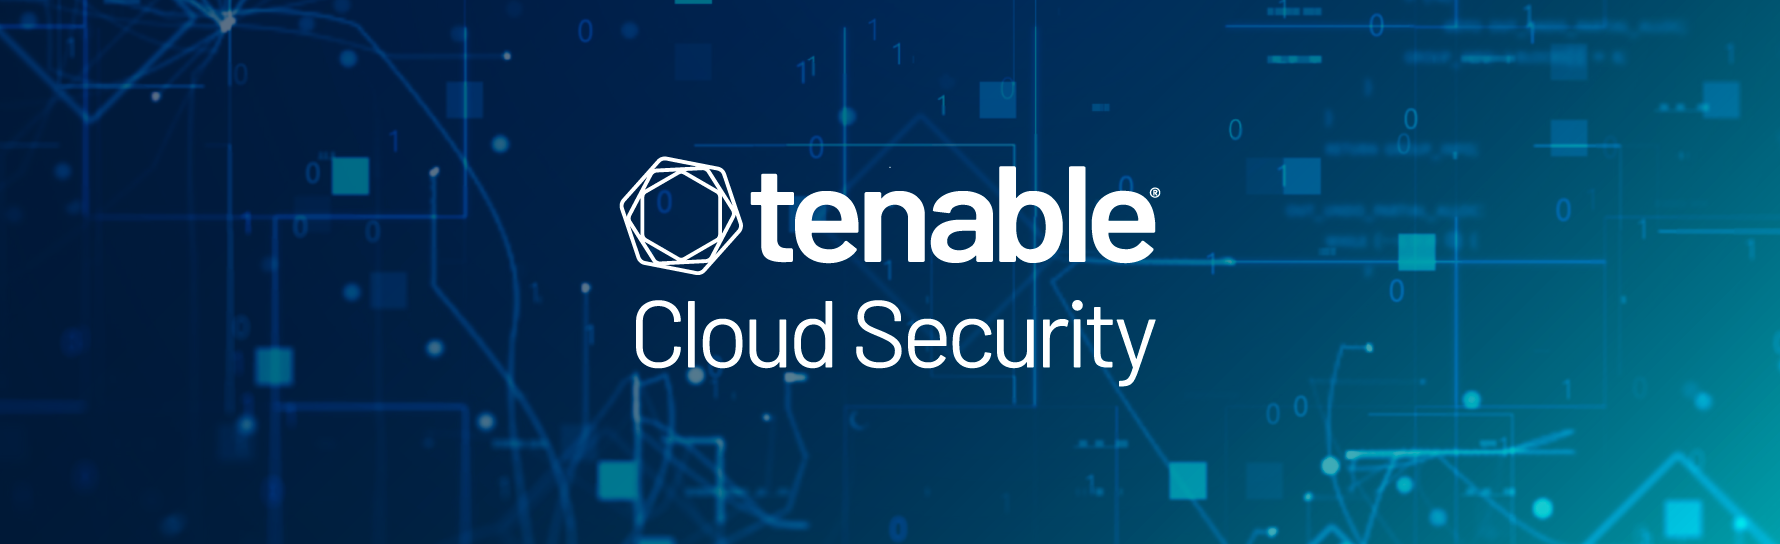 Tenable Cloud Security